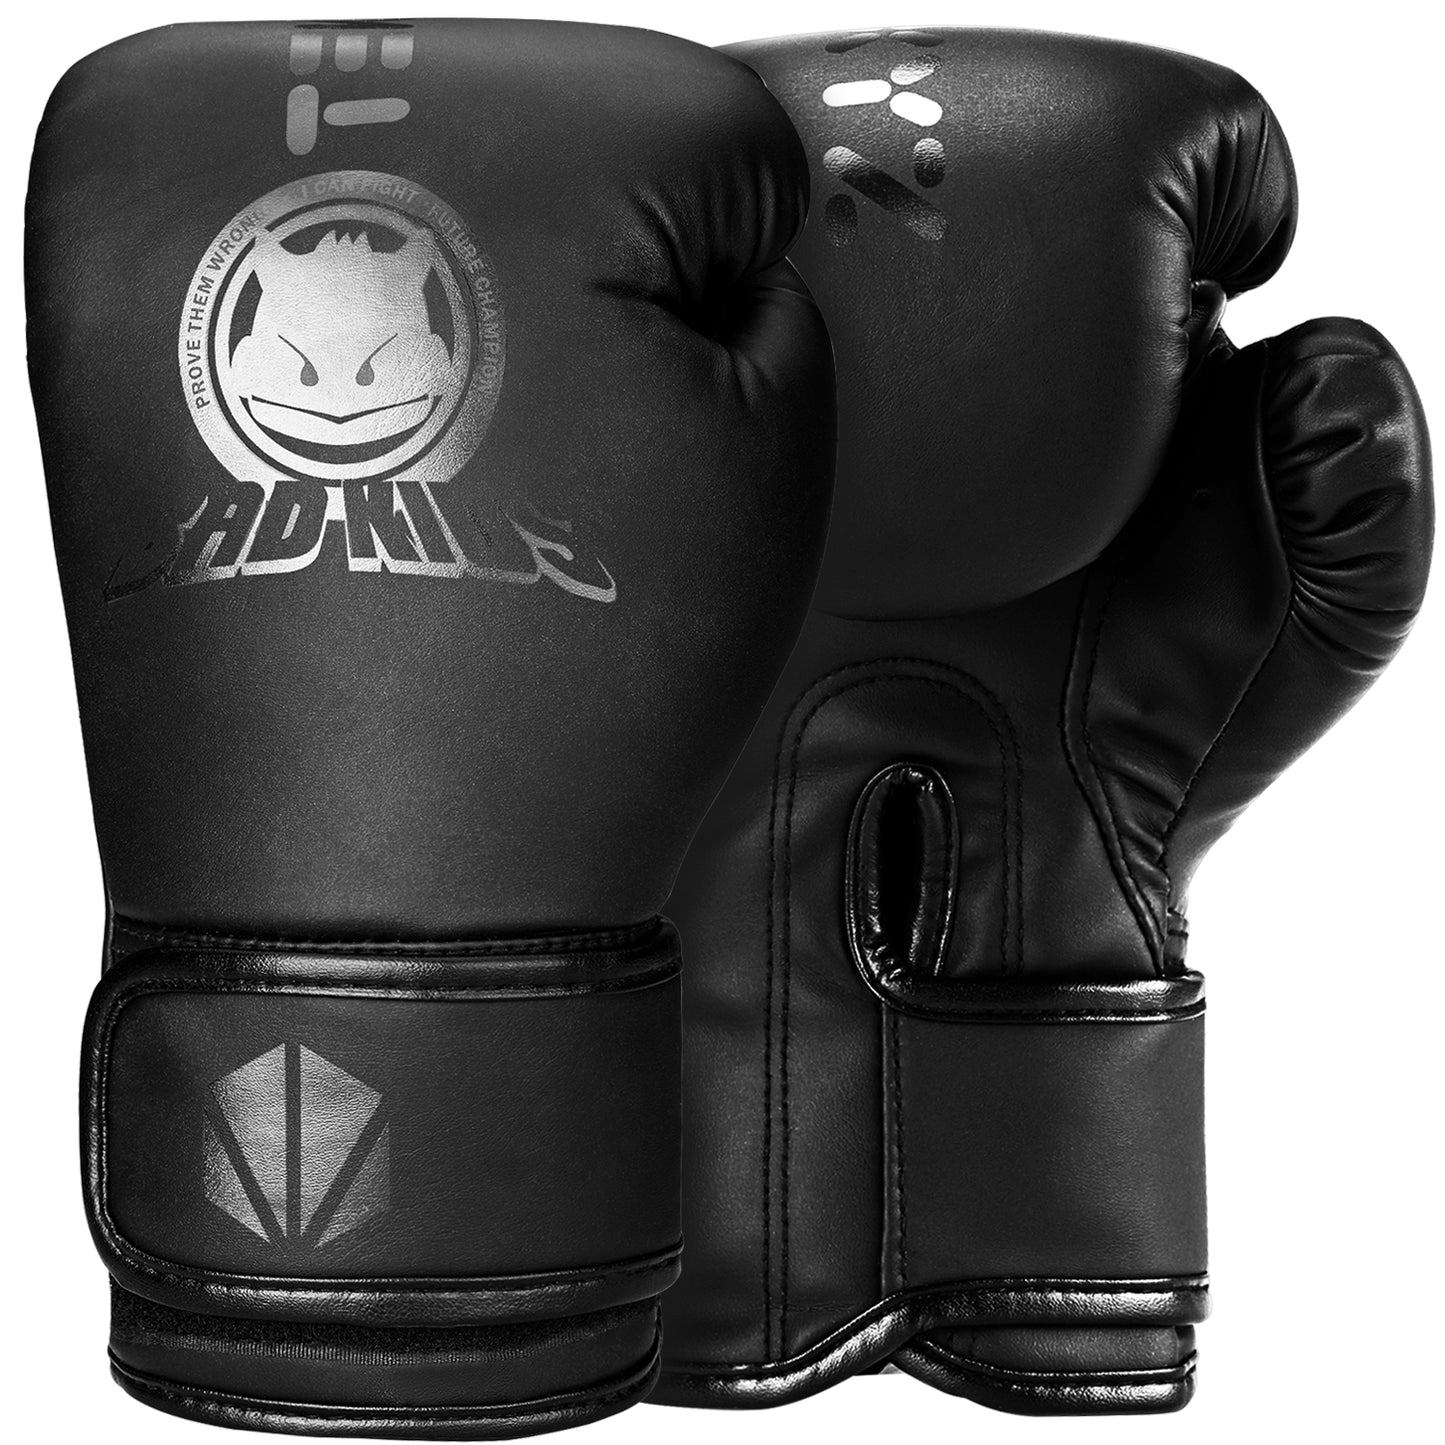 TEKXYZ Bad Kids Series Boxing Gloves - 6oz